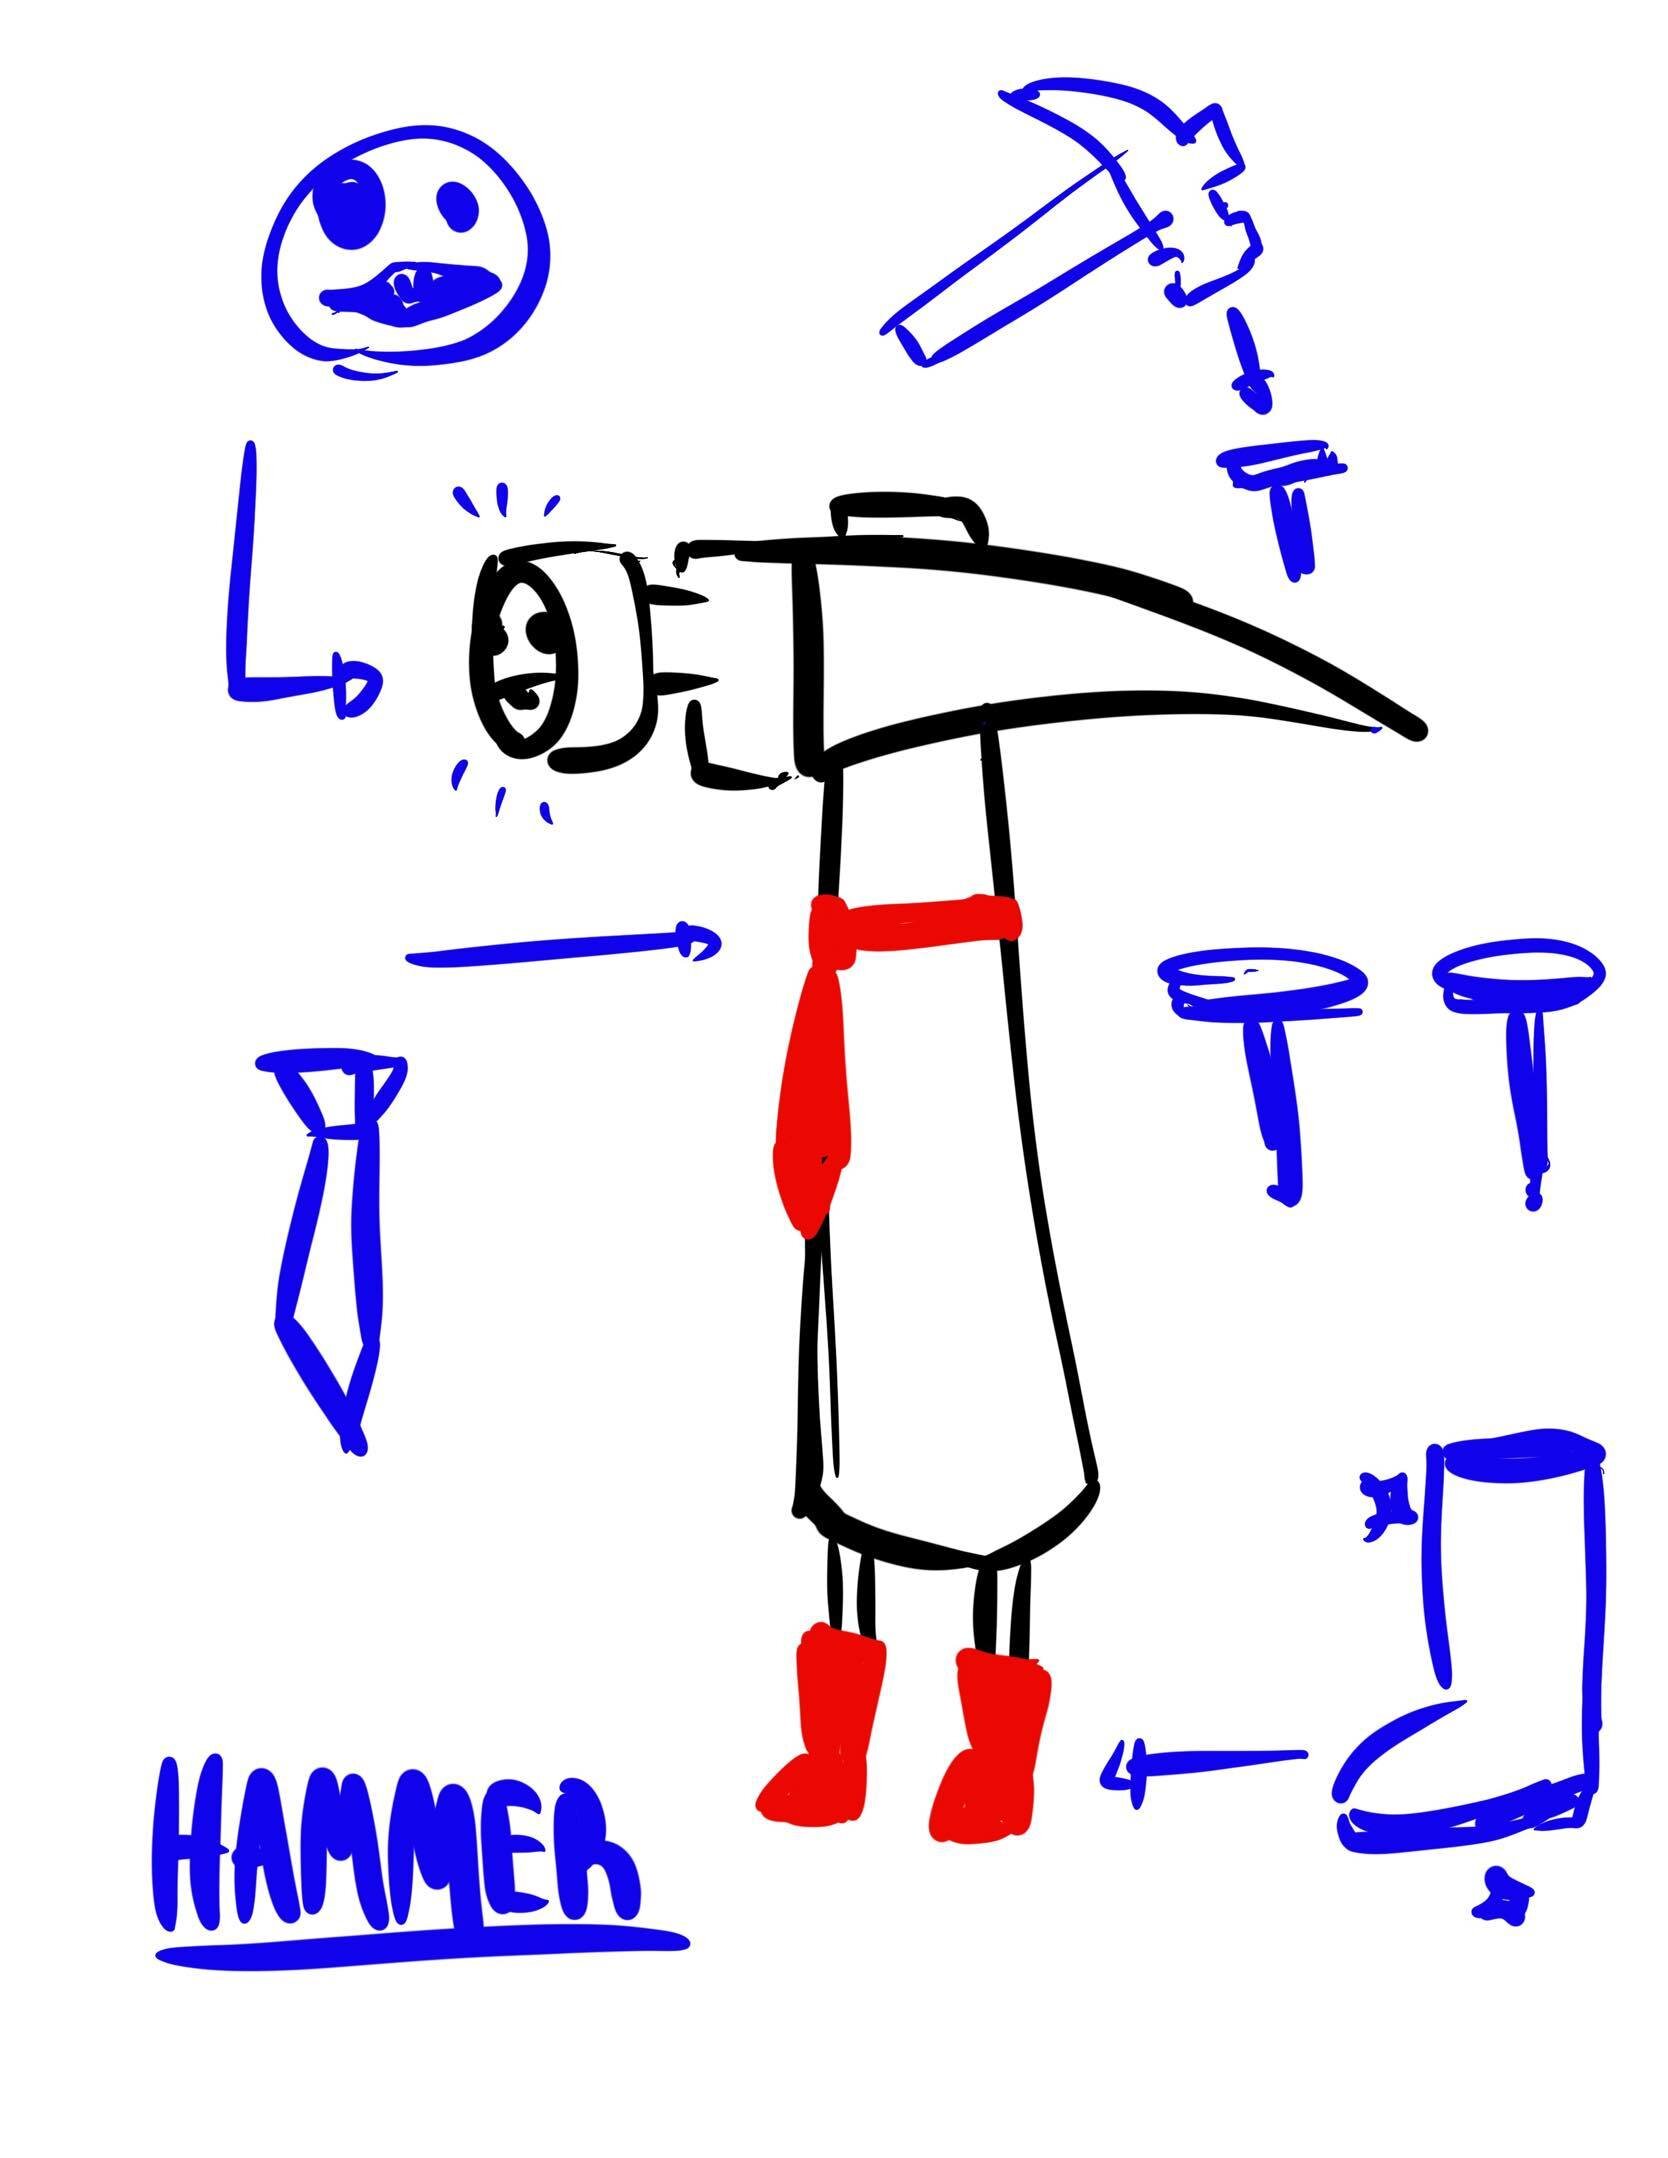 Hammer_sketch.jpg